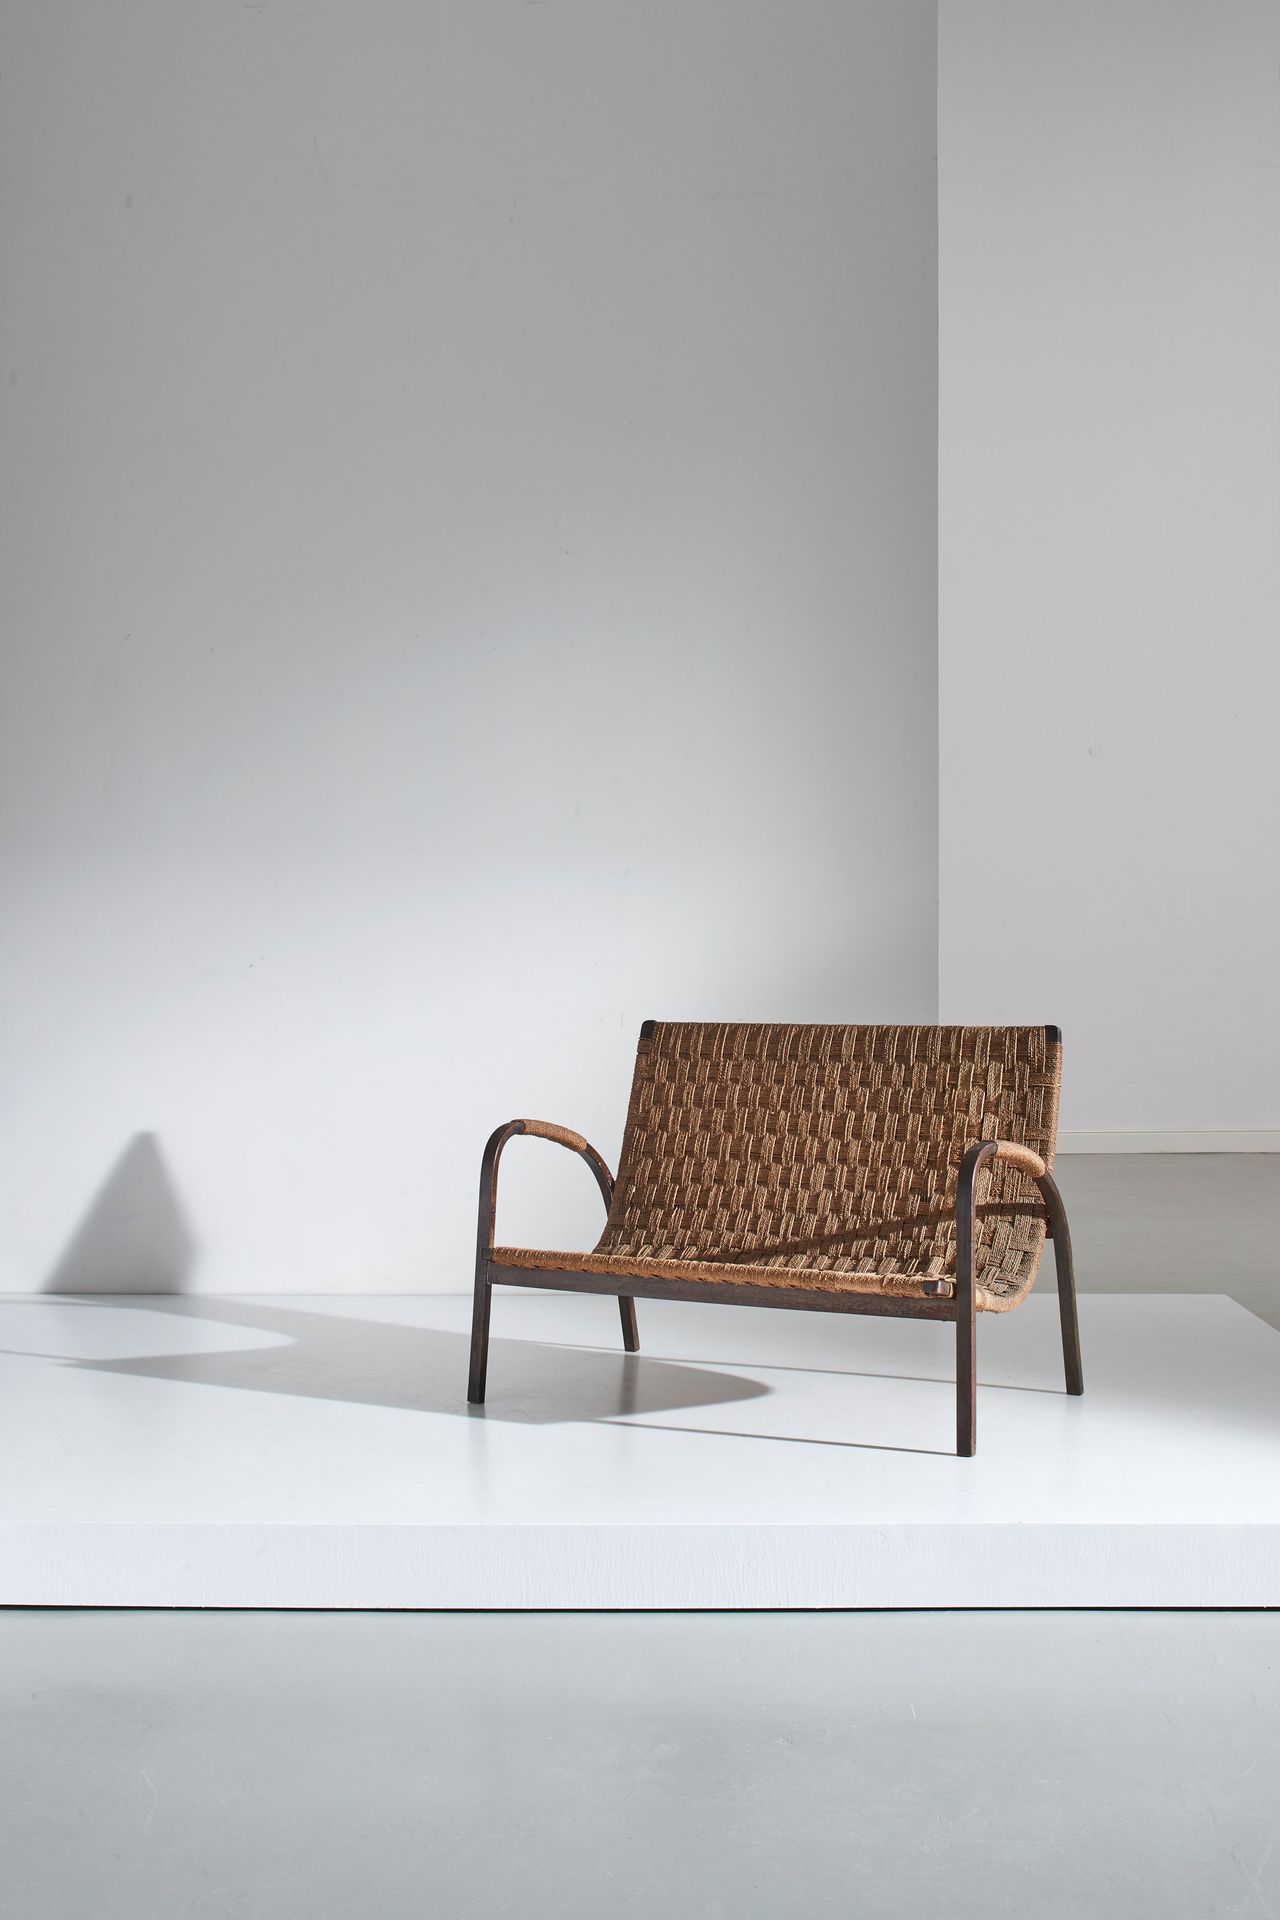 LUIGI RICCI Modernist sofa. Curved beech wood, woven hemp rope.
Cm 81x114x78
A M&hellip;